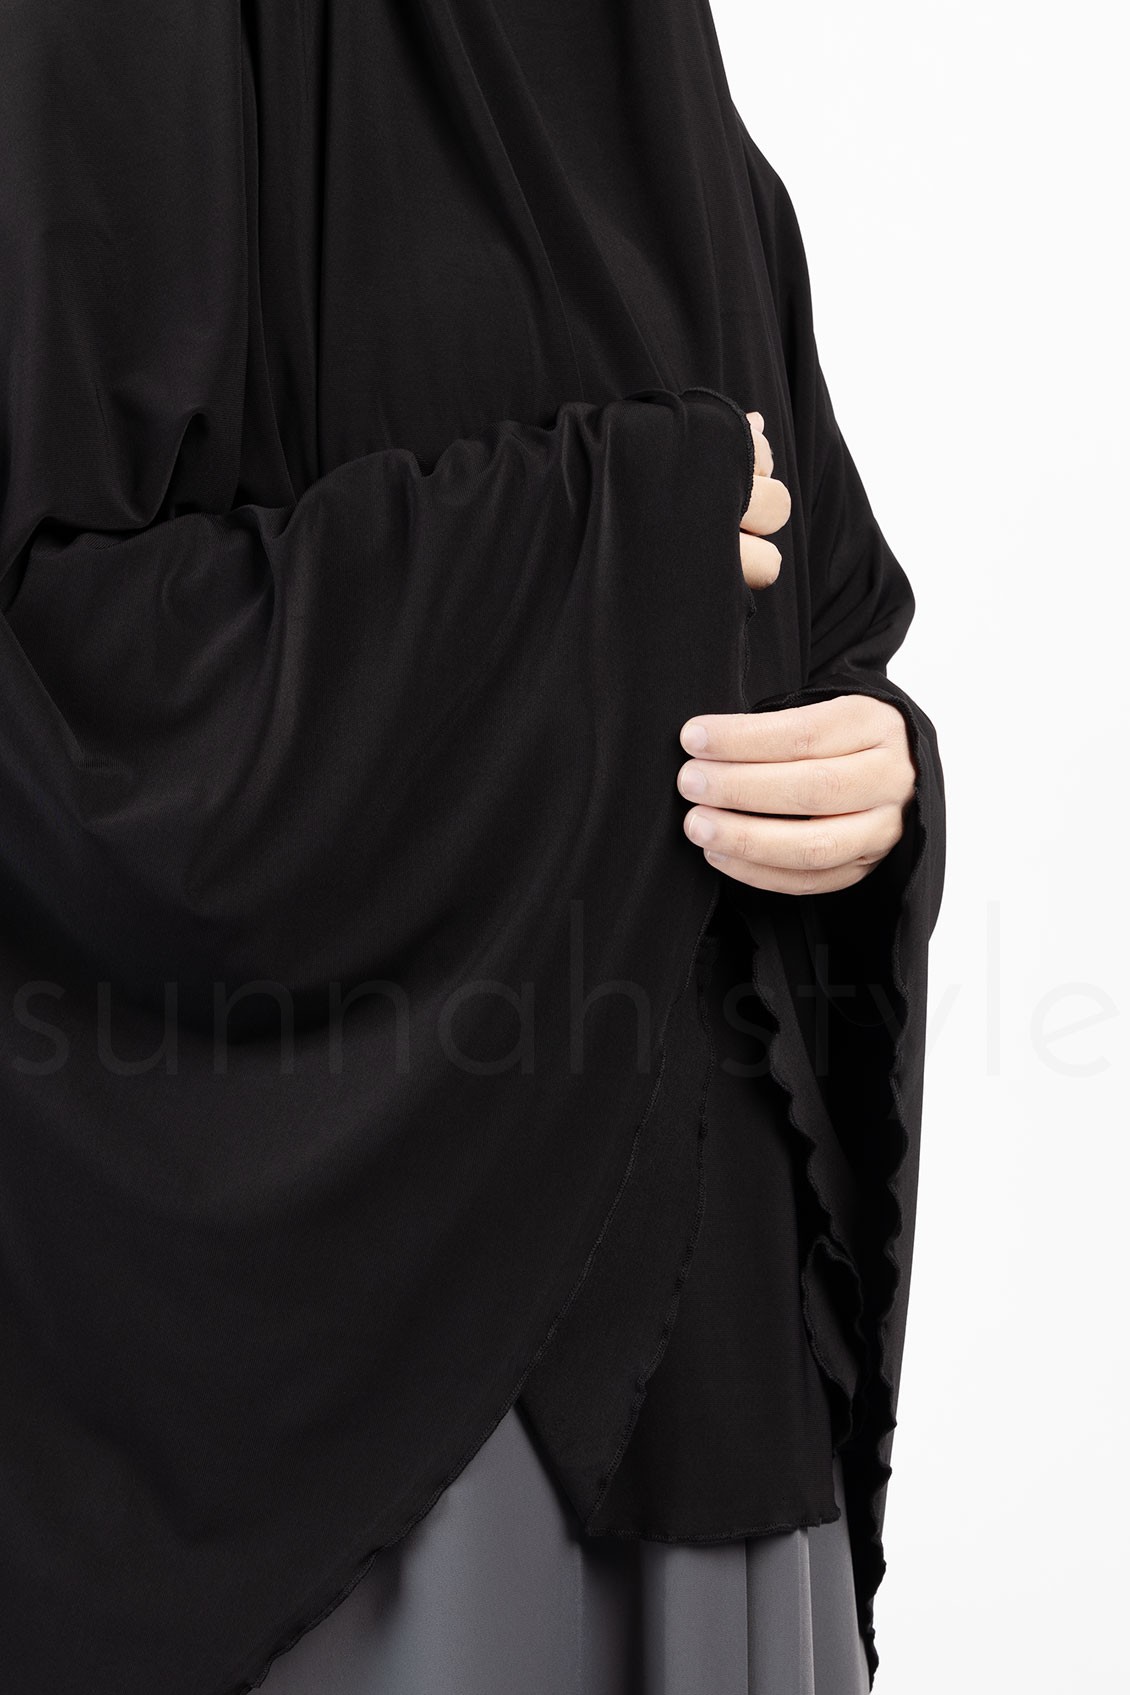 Sunnah Style Jersey Khimar Thigh Length Black